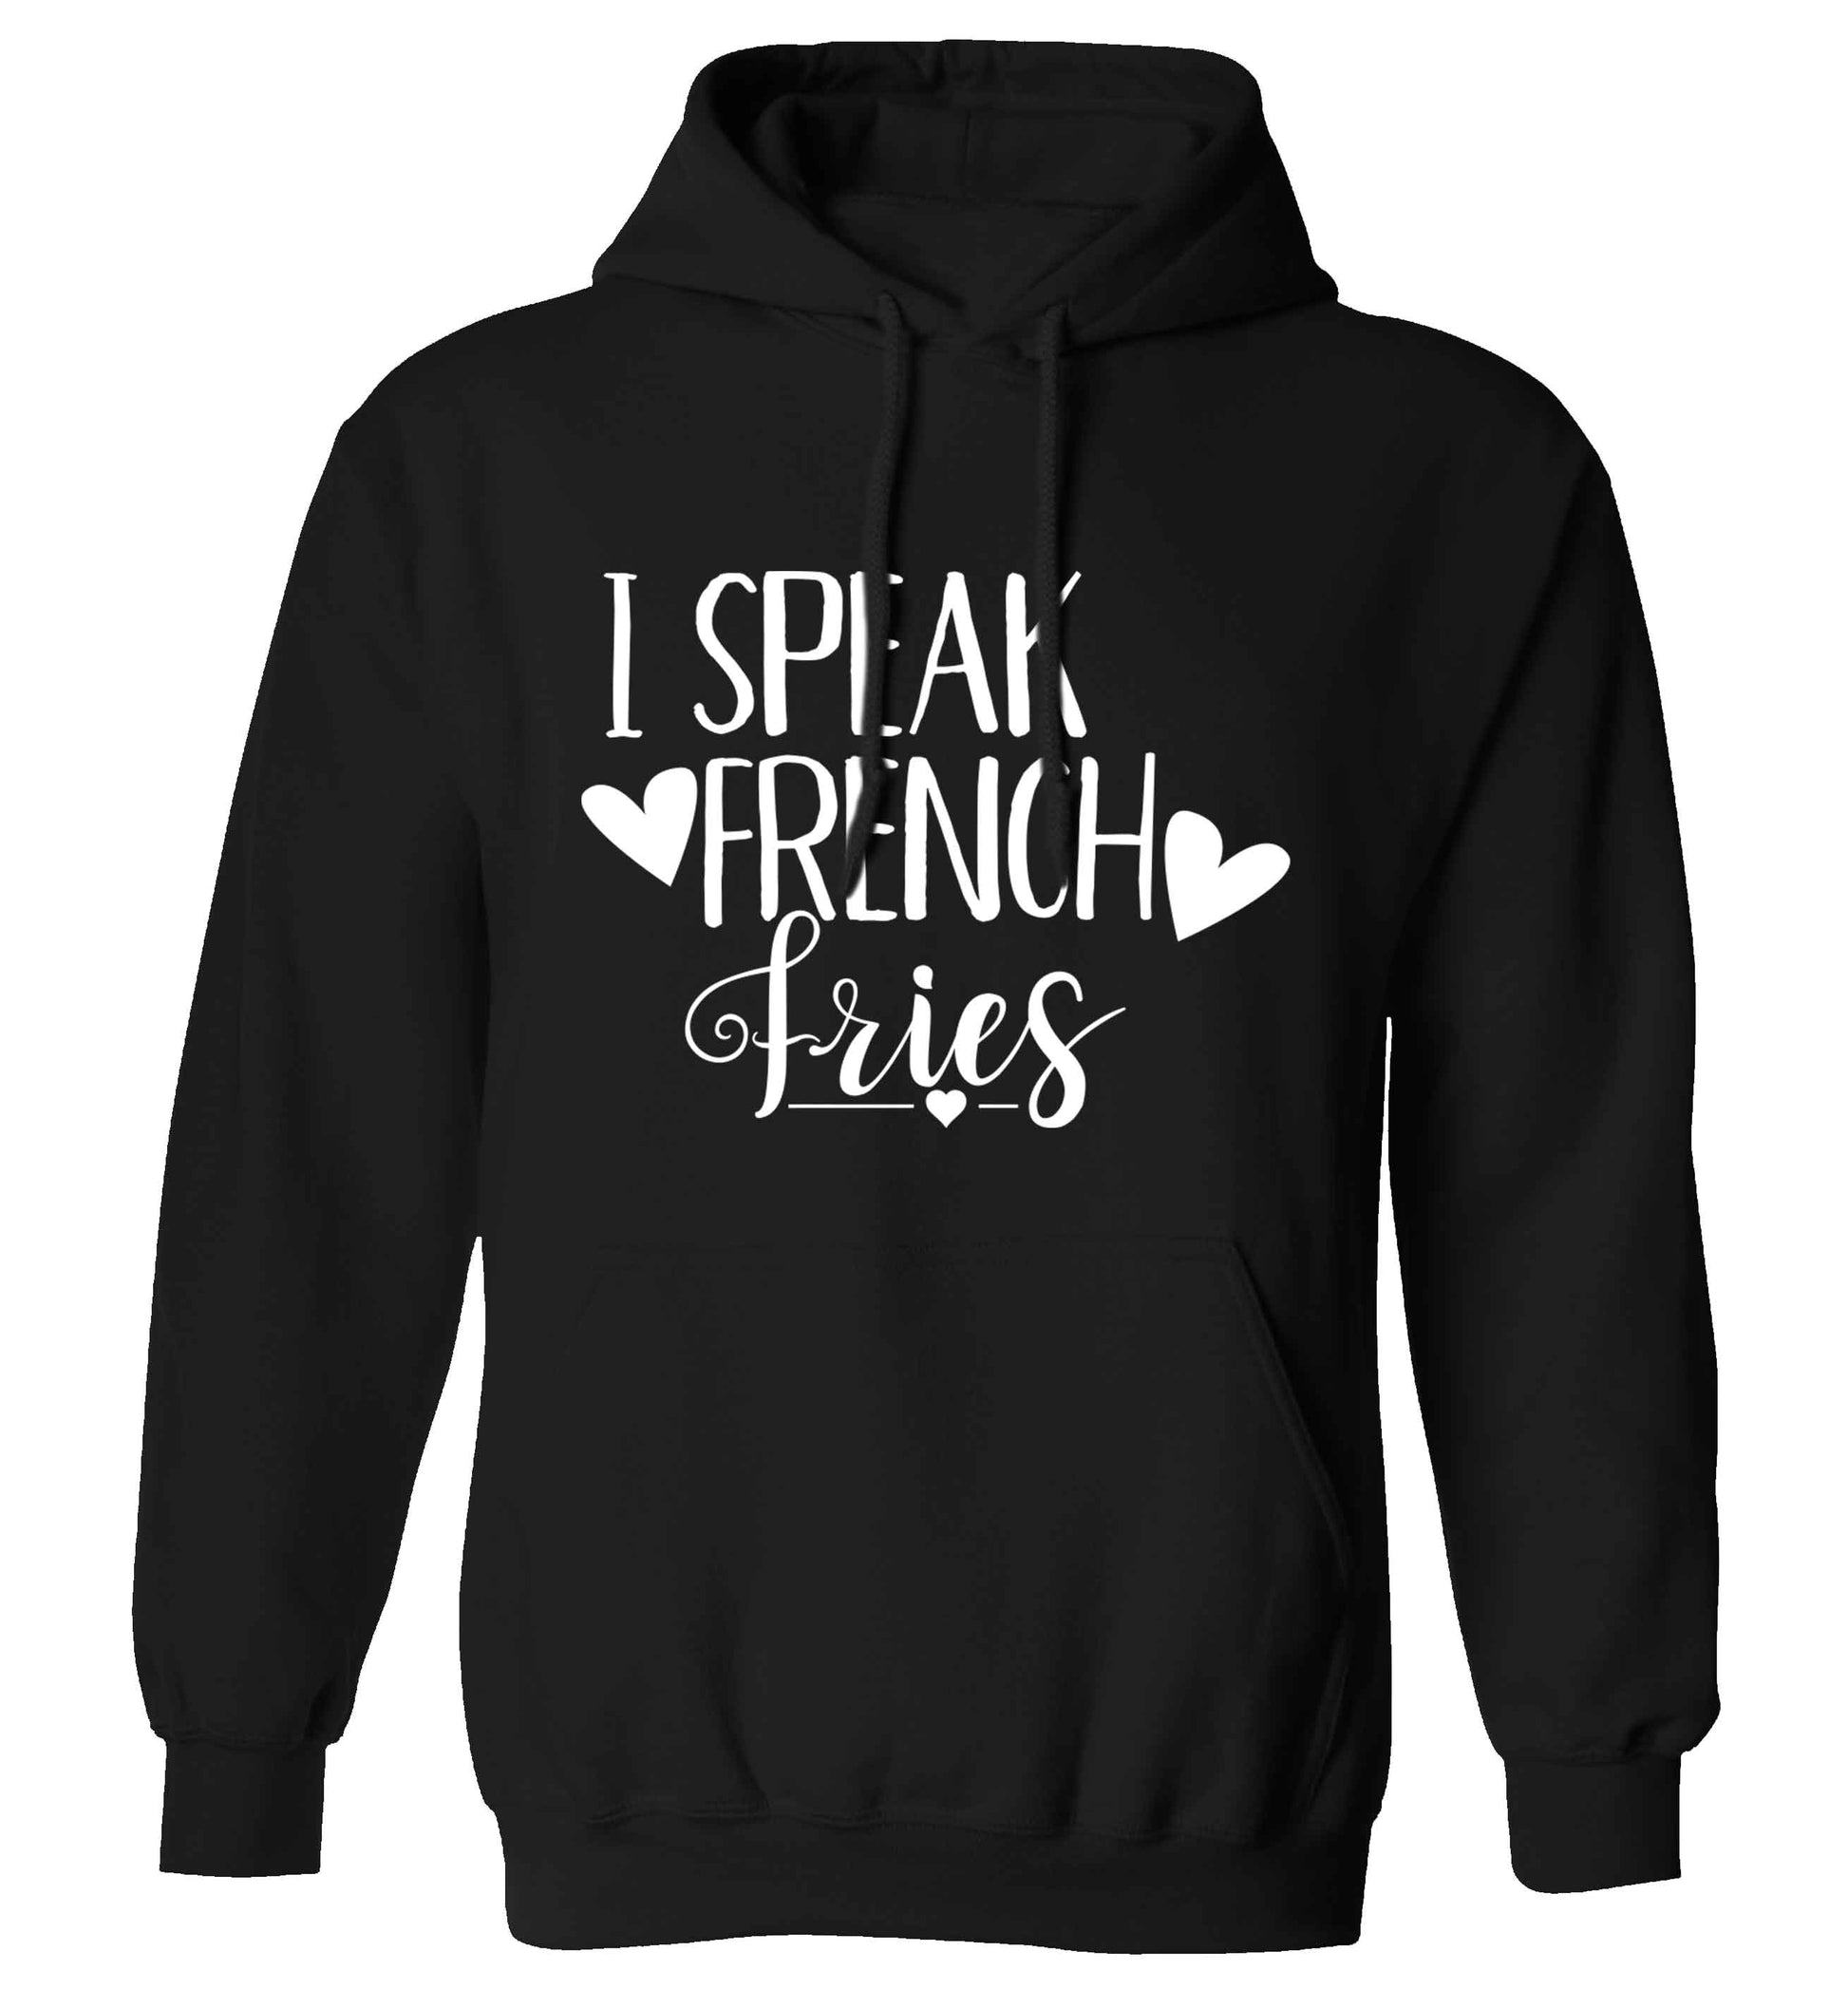 I speak French fries adults unisex black hoodie 2XL